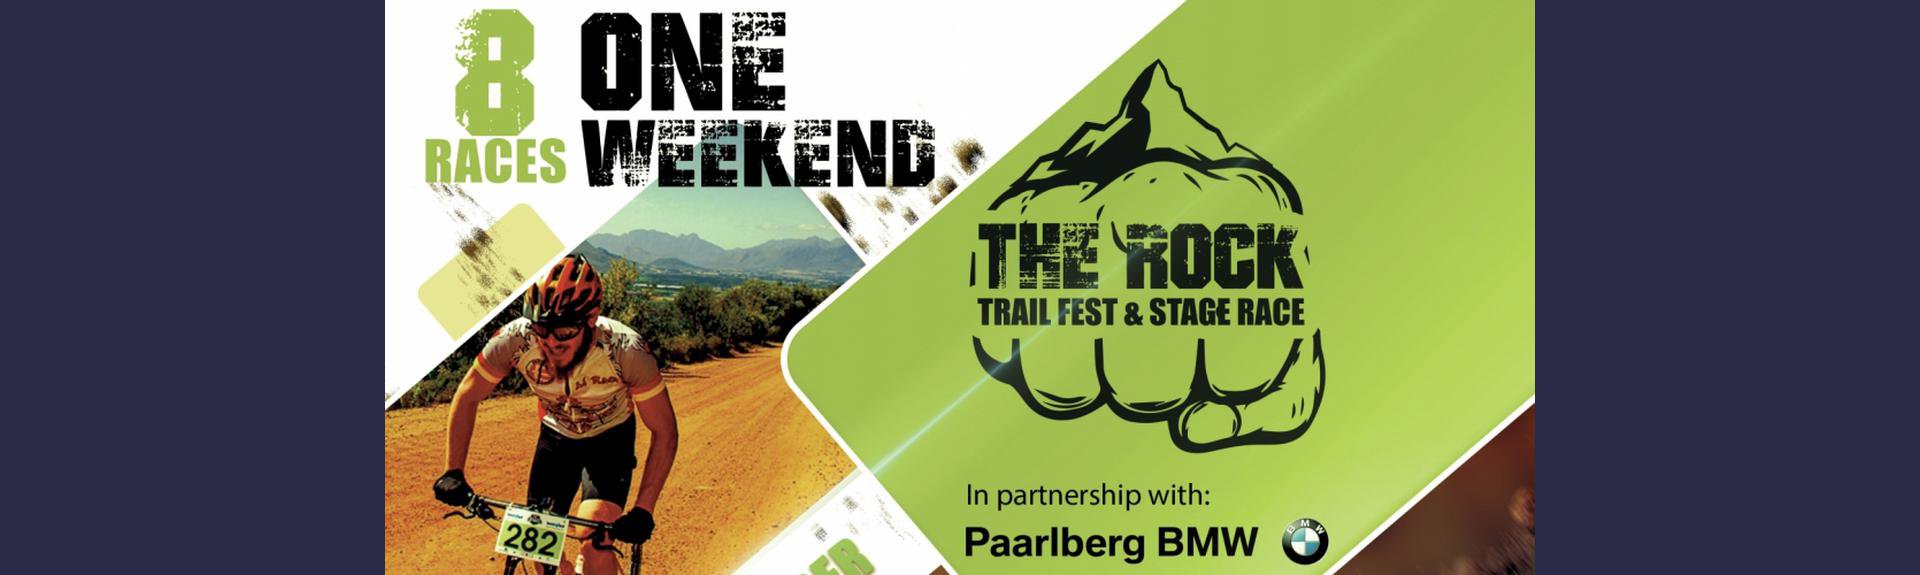 The Rock MTB and Trail Run Fest